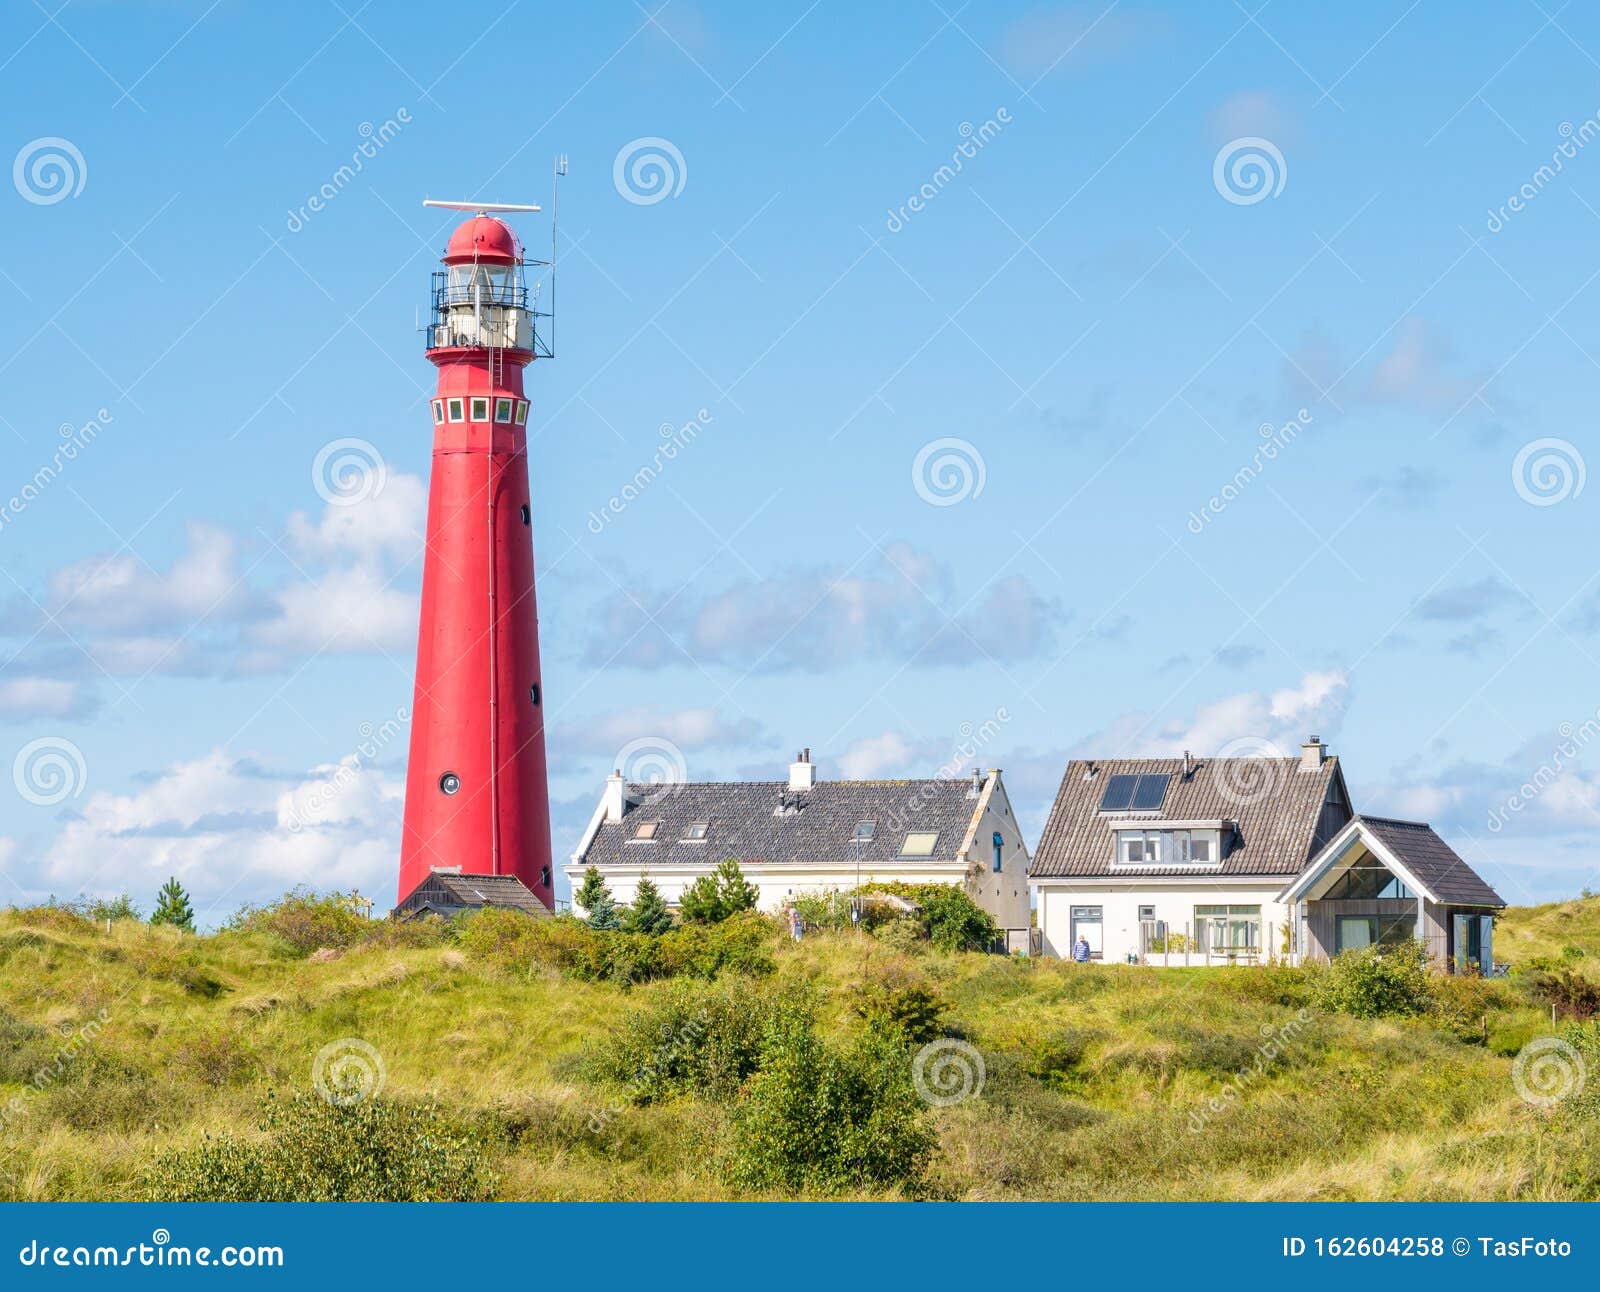 lighthouse in dunes of schiermonnikoog, west-frisian island, netherlands